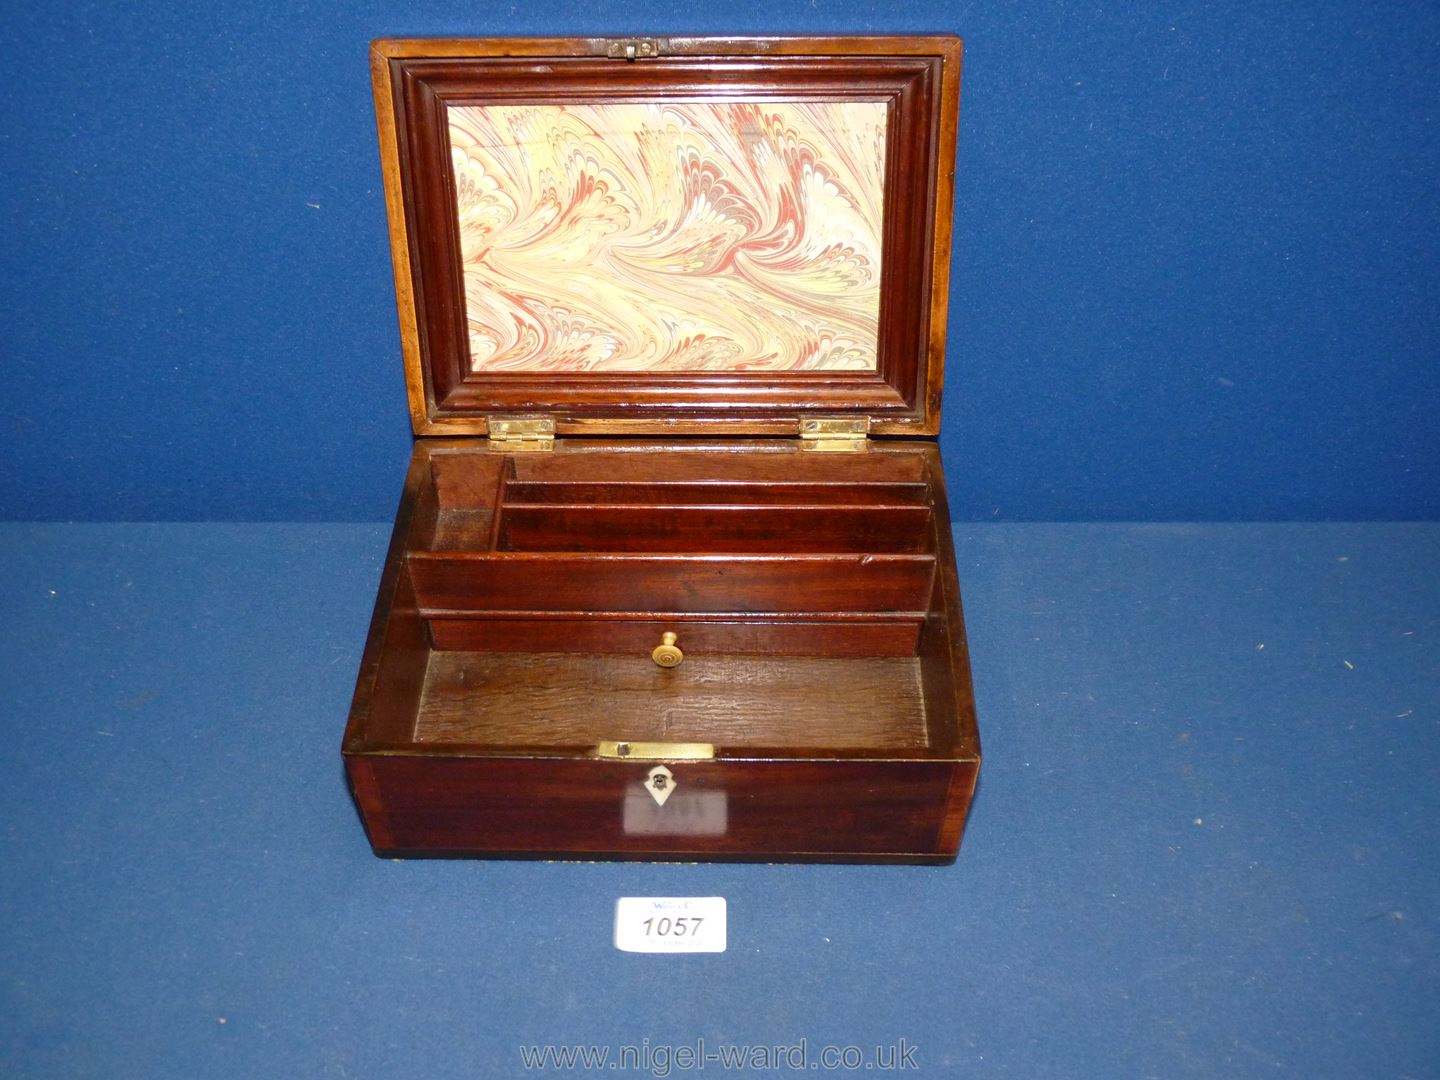 A Mahogany inlaid jewellery Box c. 1910, key present, 8 1/4" long x 6" wide x 3" deep. - Image 2 of 2